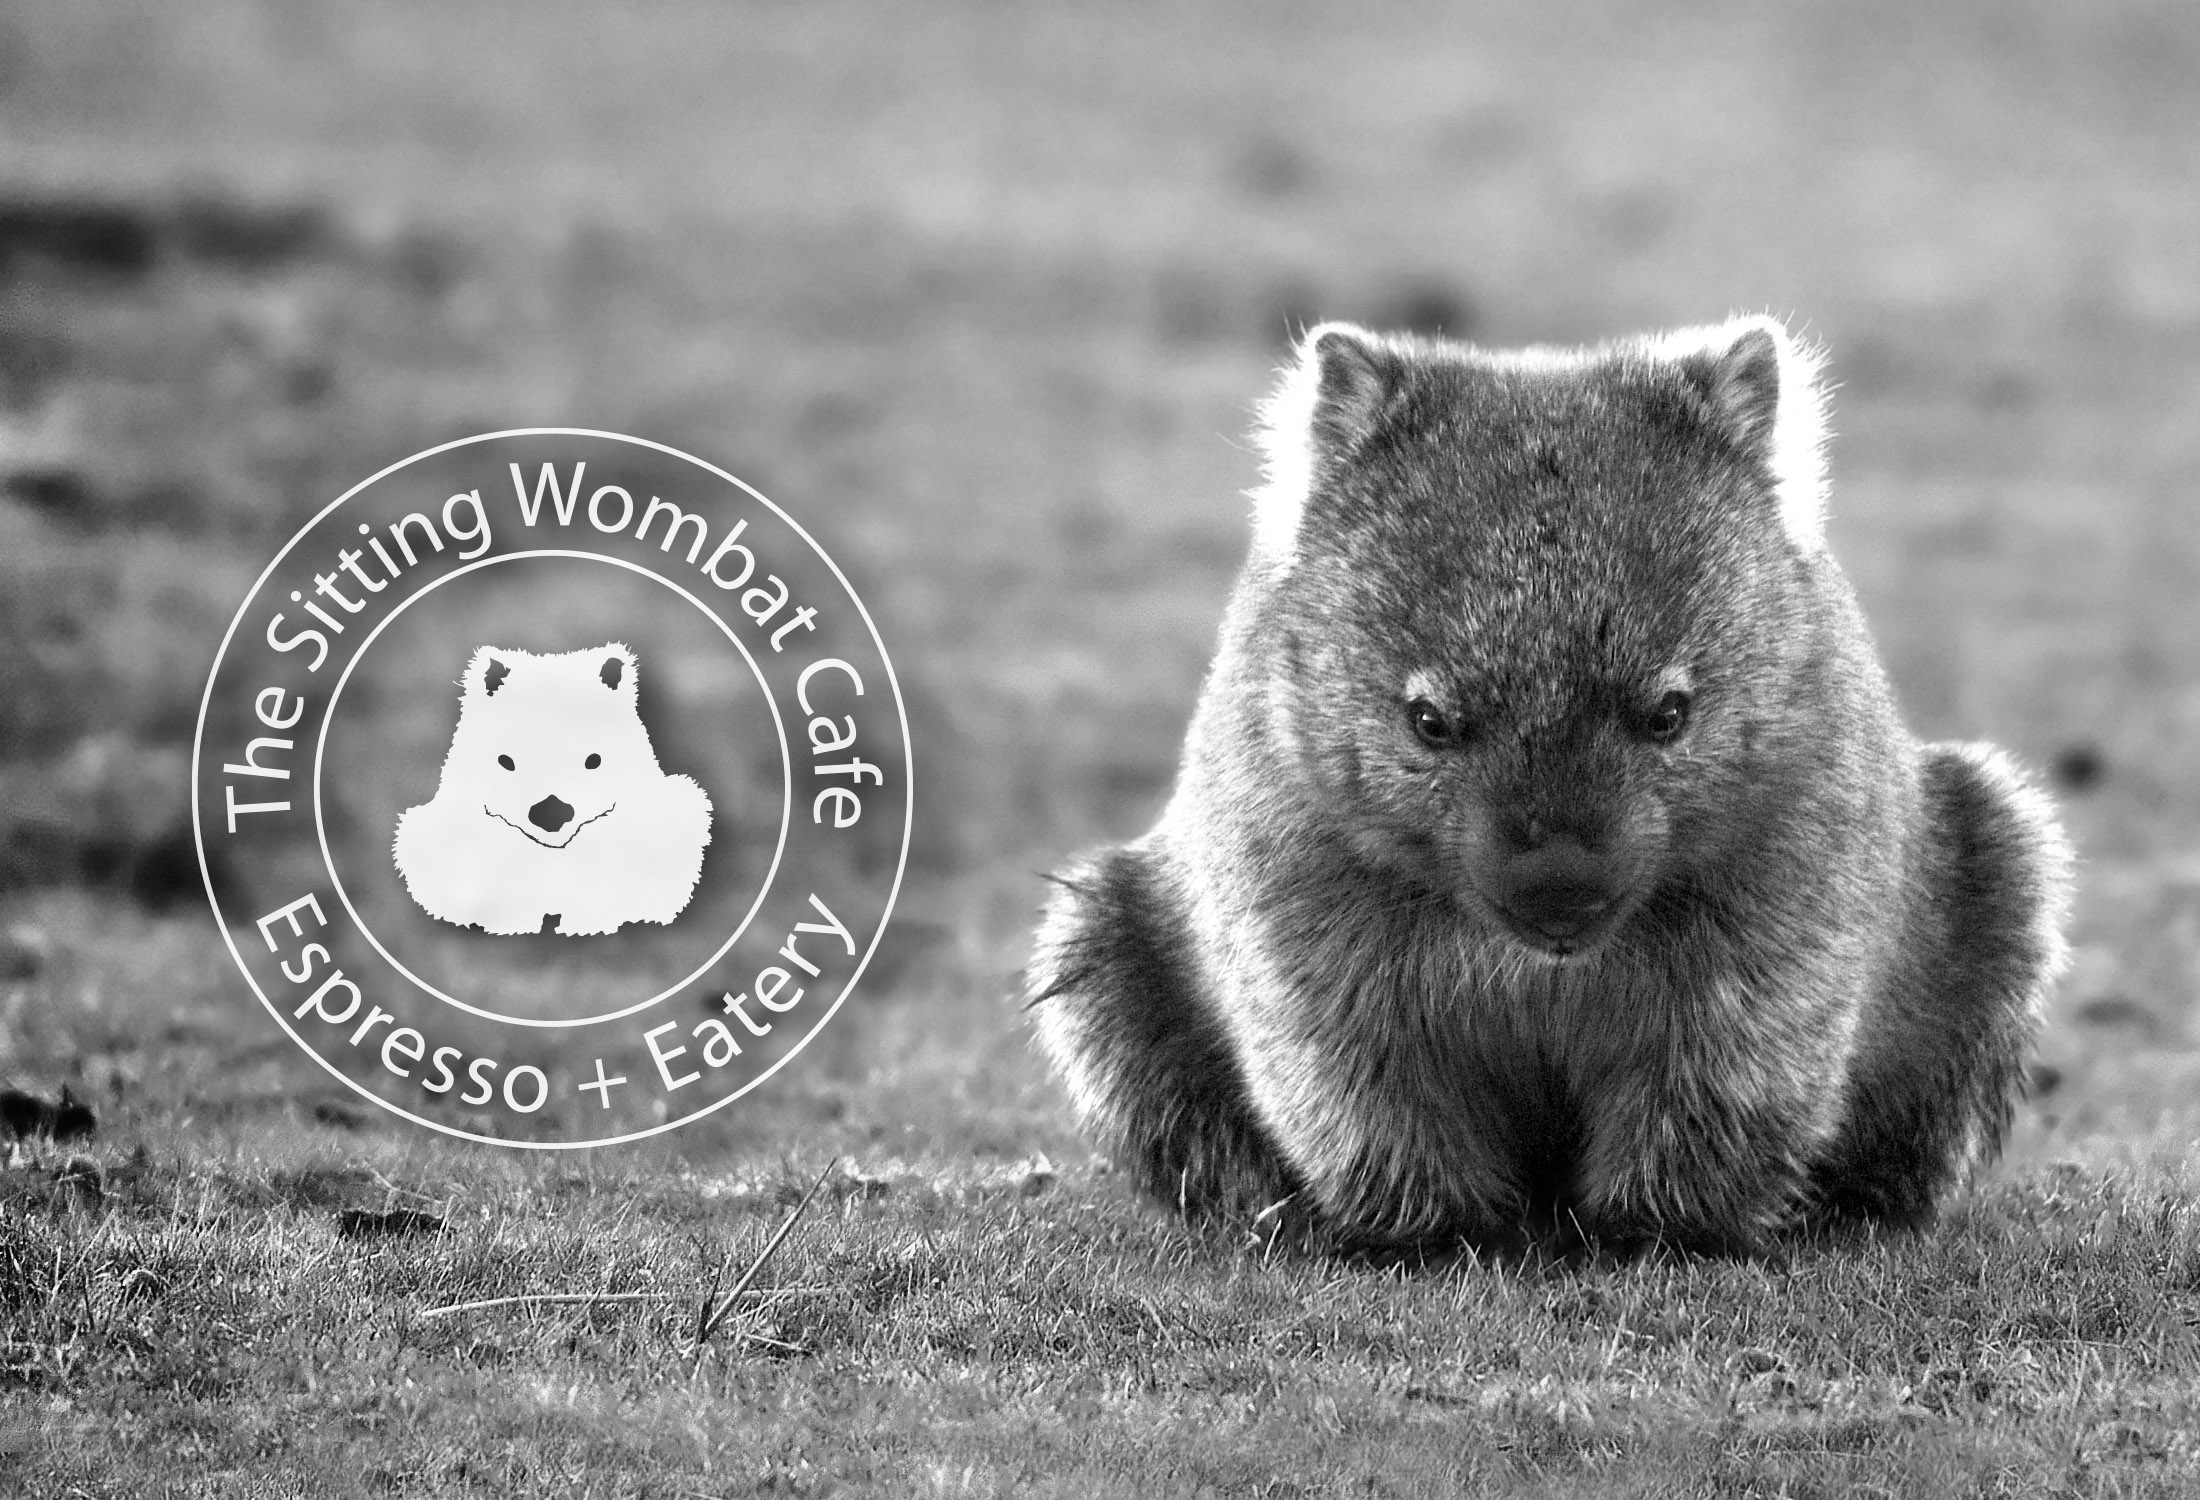 Sitting Wombat